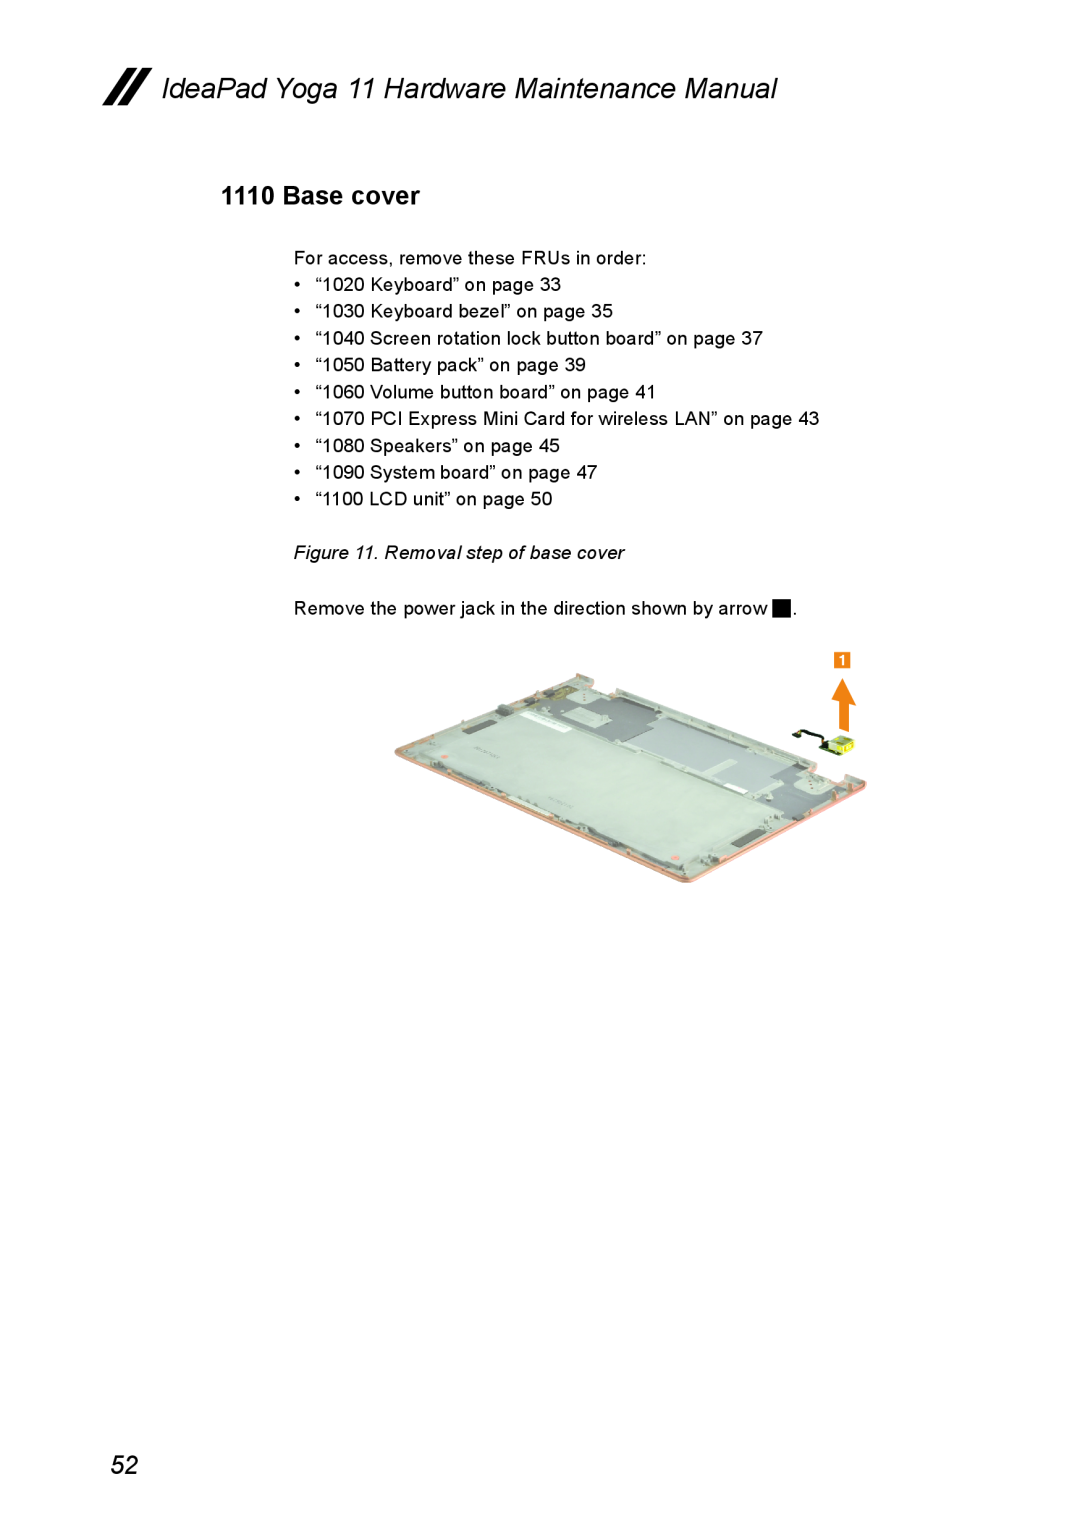 Lenovo manual Base cover, Removal step of base cover, IdeaPad Yoga 11 Hardware Maintenance Manual 